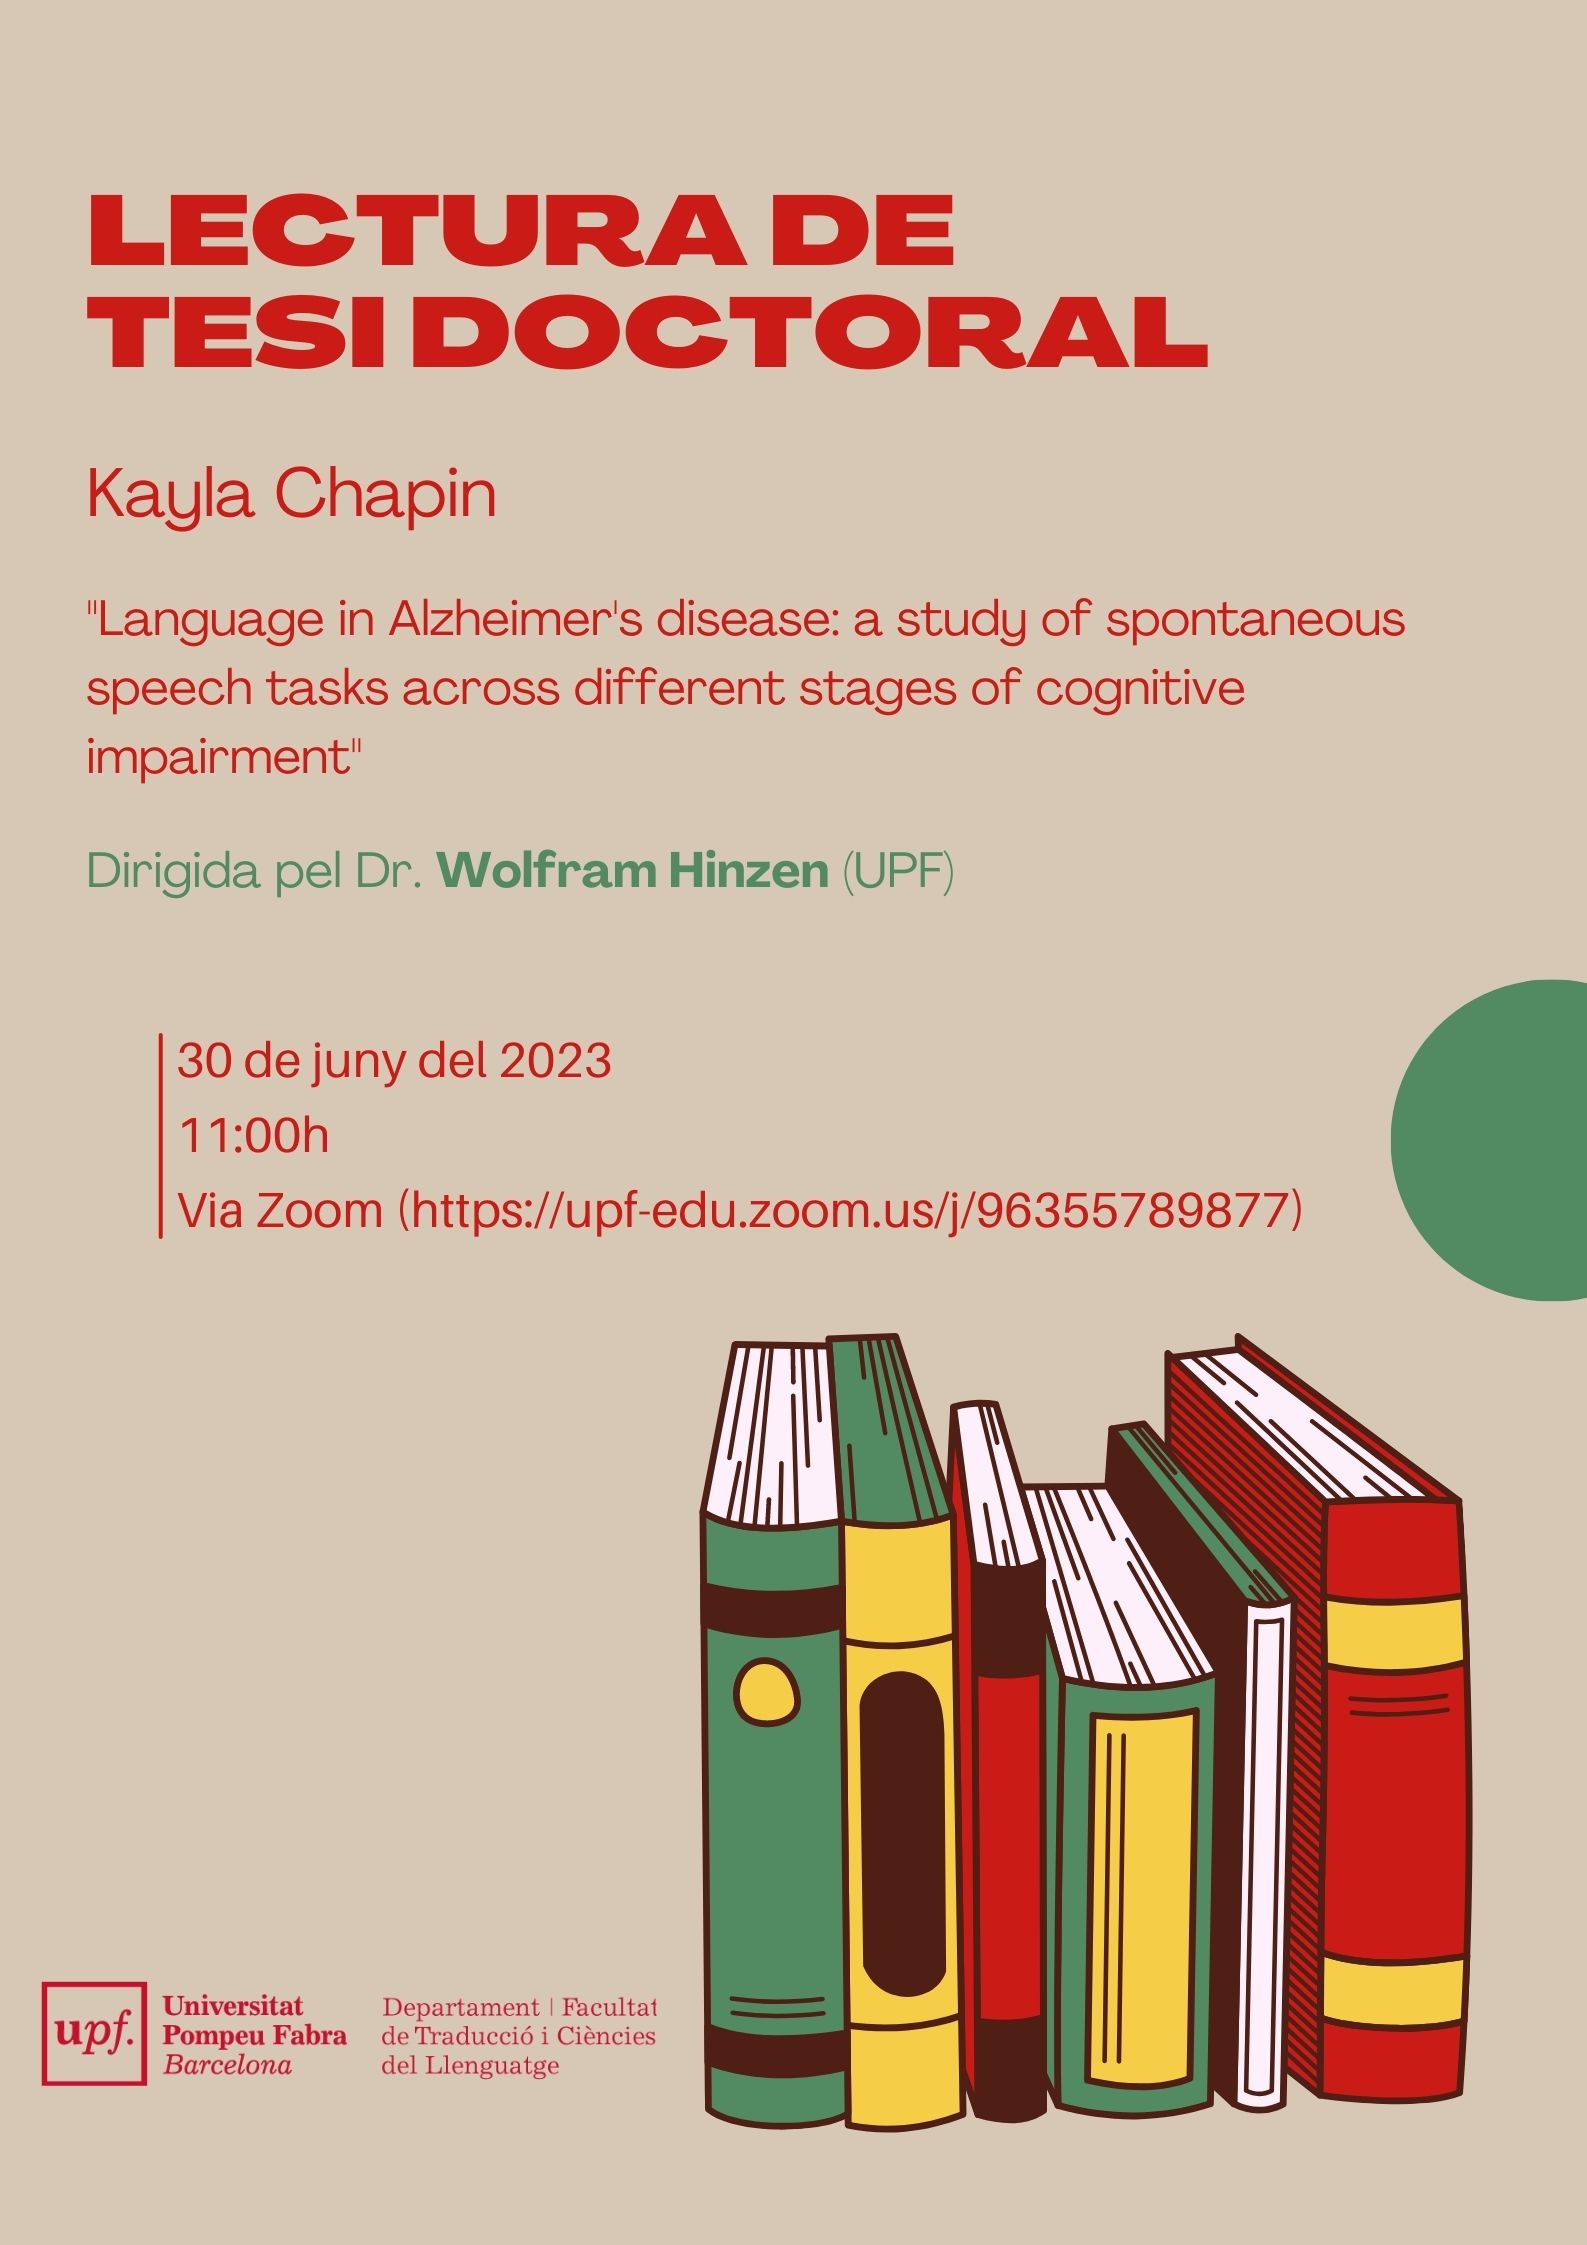 30/06/2023 Lectura de tesi doctoral de Kayla Chapin, a les 11.00 hores